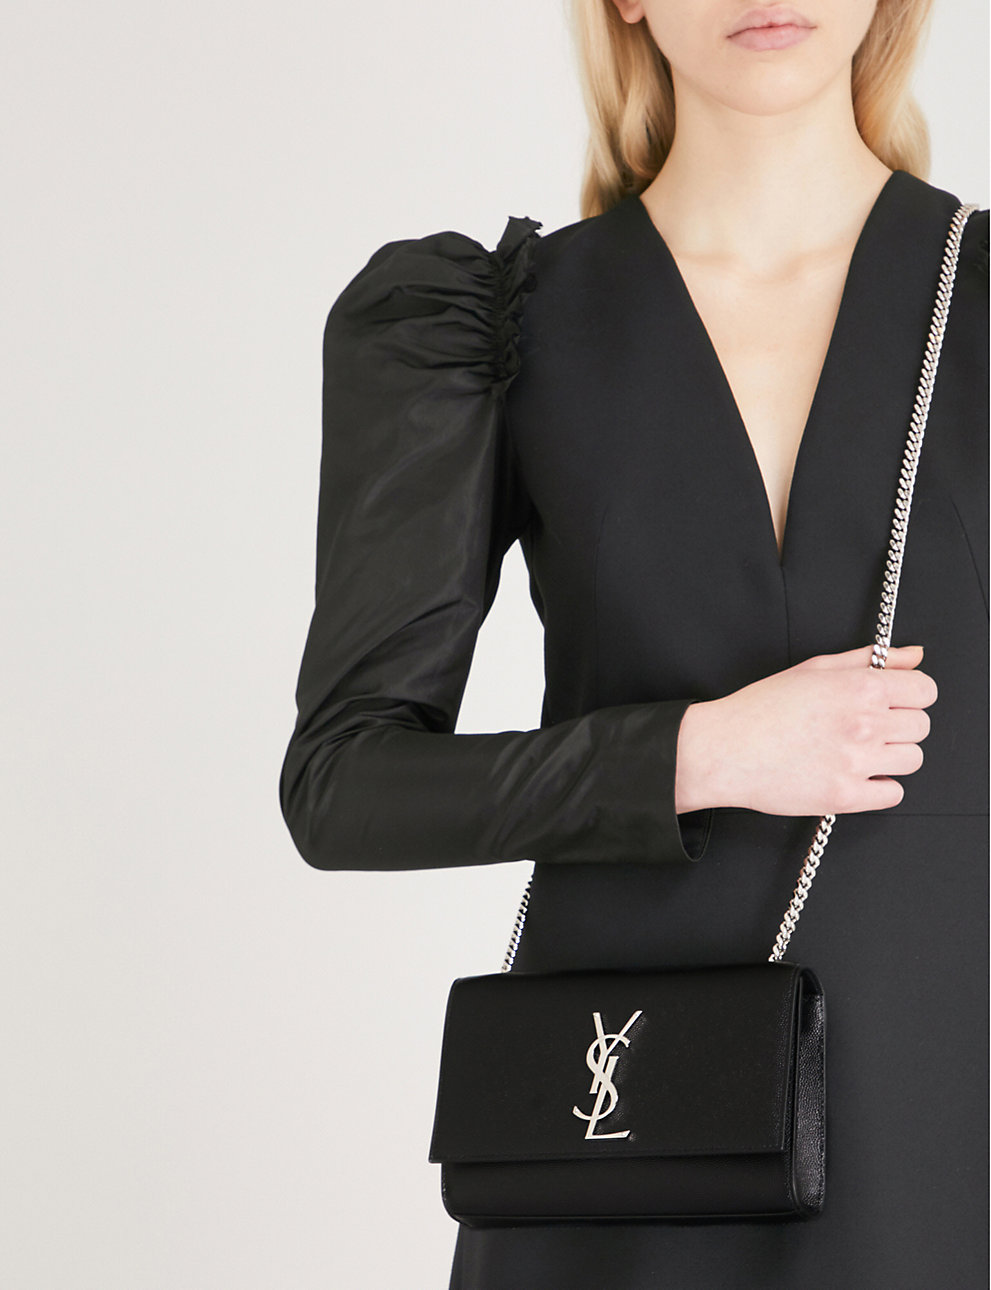 Saint Laurent Small Kate Cross-body Bag - Black - One Size